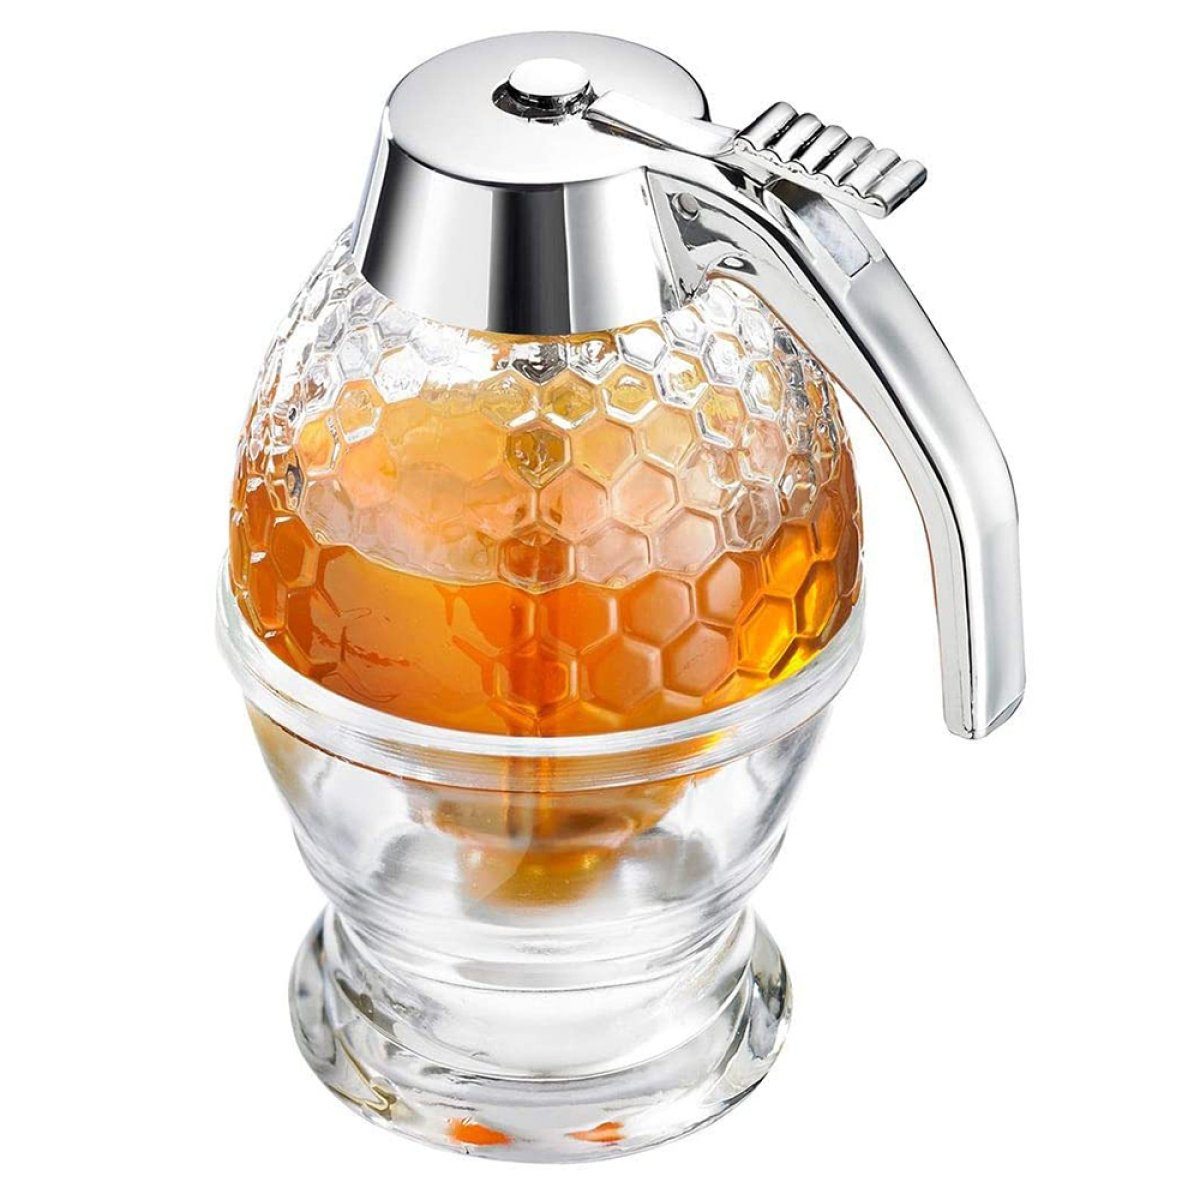 GelldG Honigglas Honigspender, 200ML Sirupspender Torffreier Glas-Honigspender, Acryl